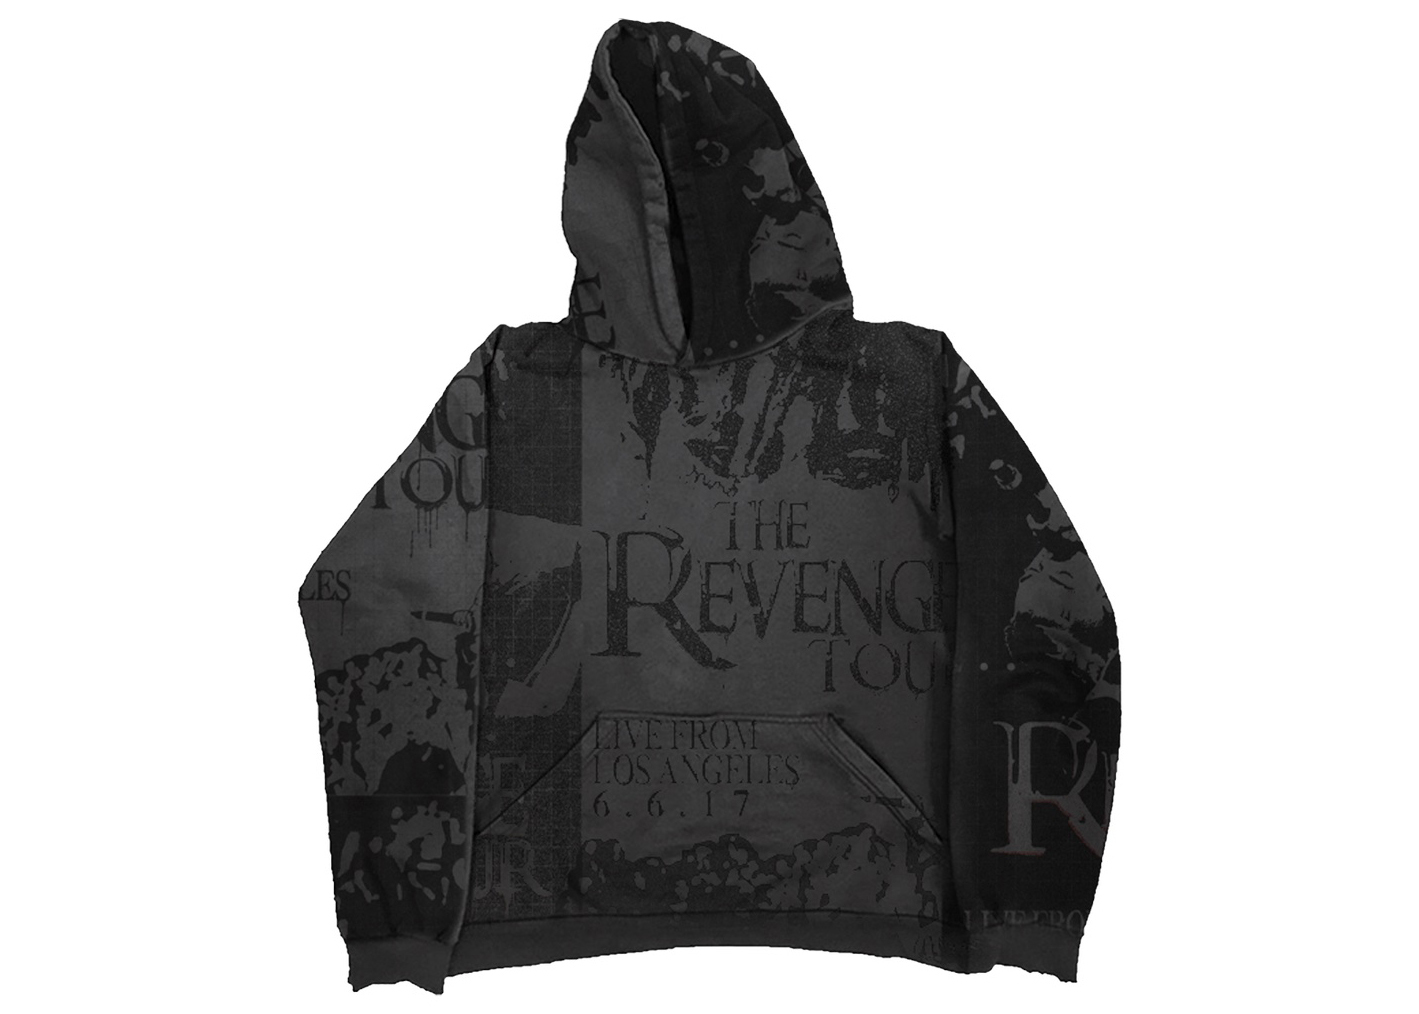 XXXTentacion The Revenge Tour Hoodie Black メンズ - 2020 - JP